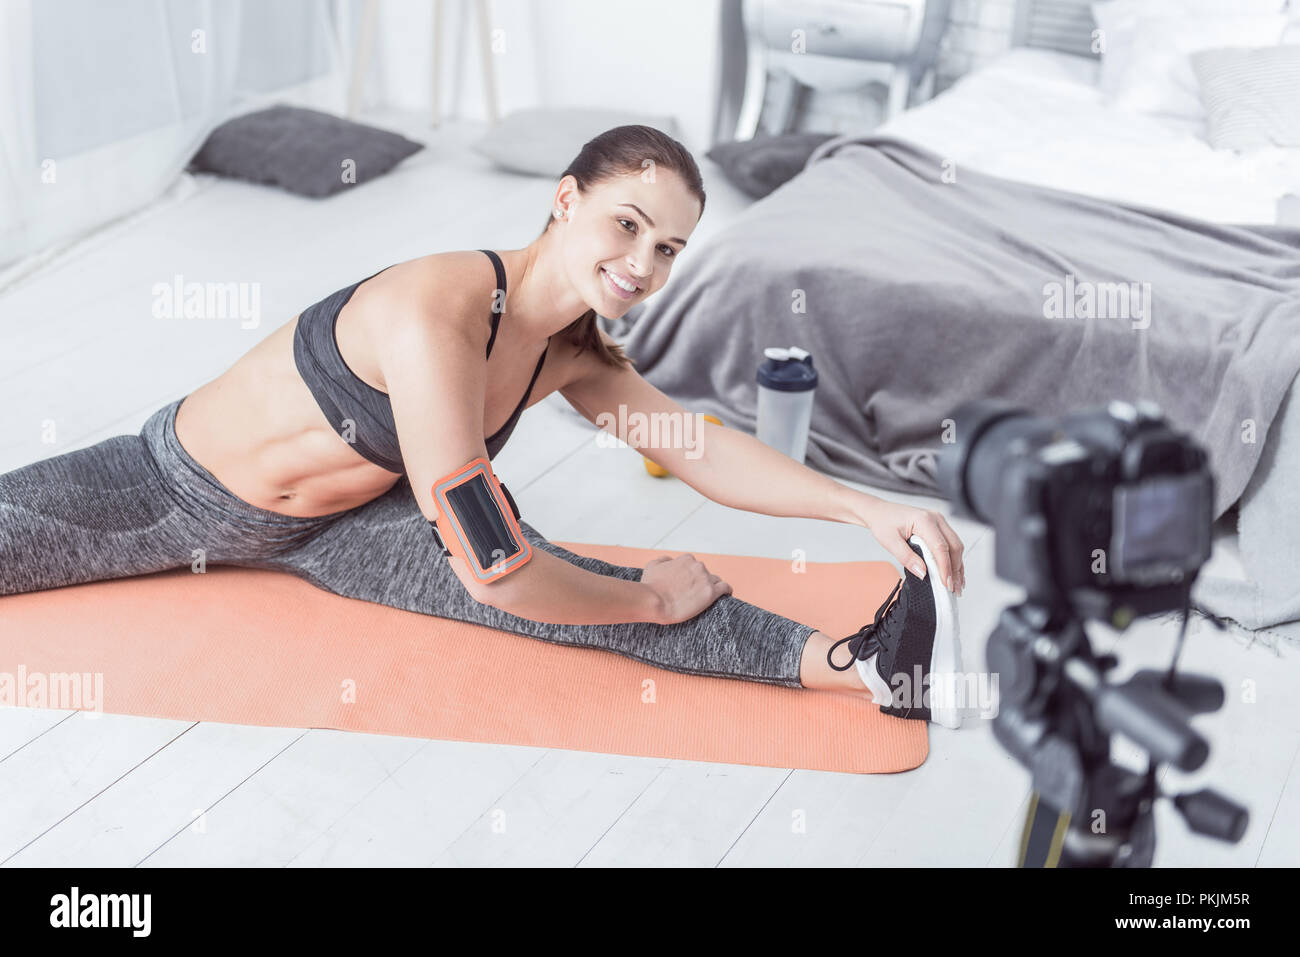 Active joyful woman enjoying her fitness workout Stock Photo